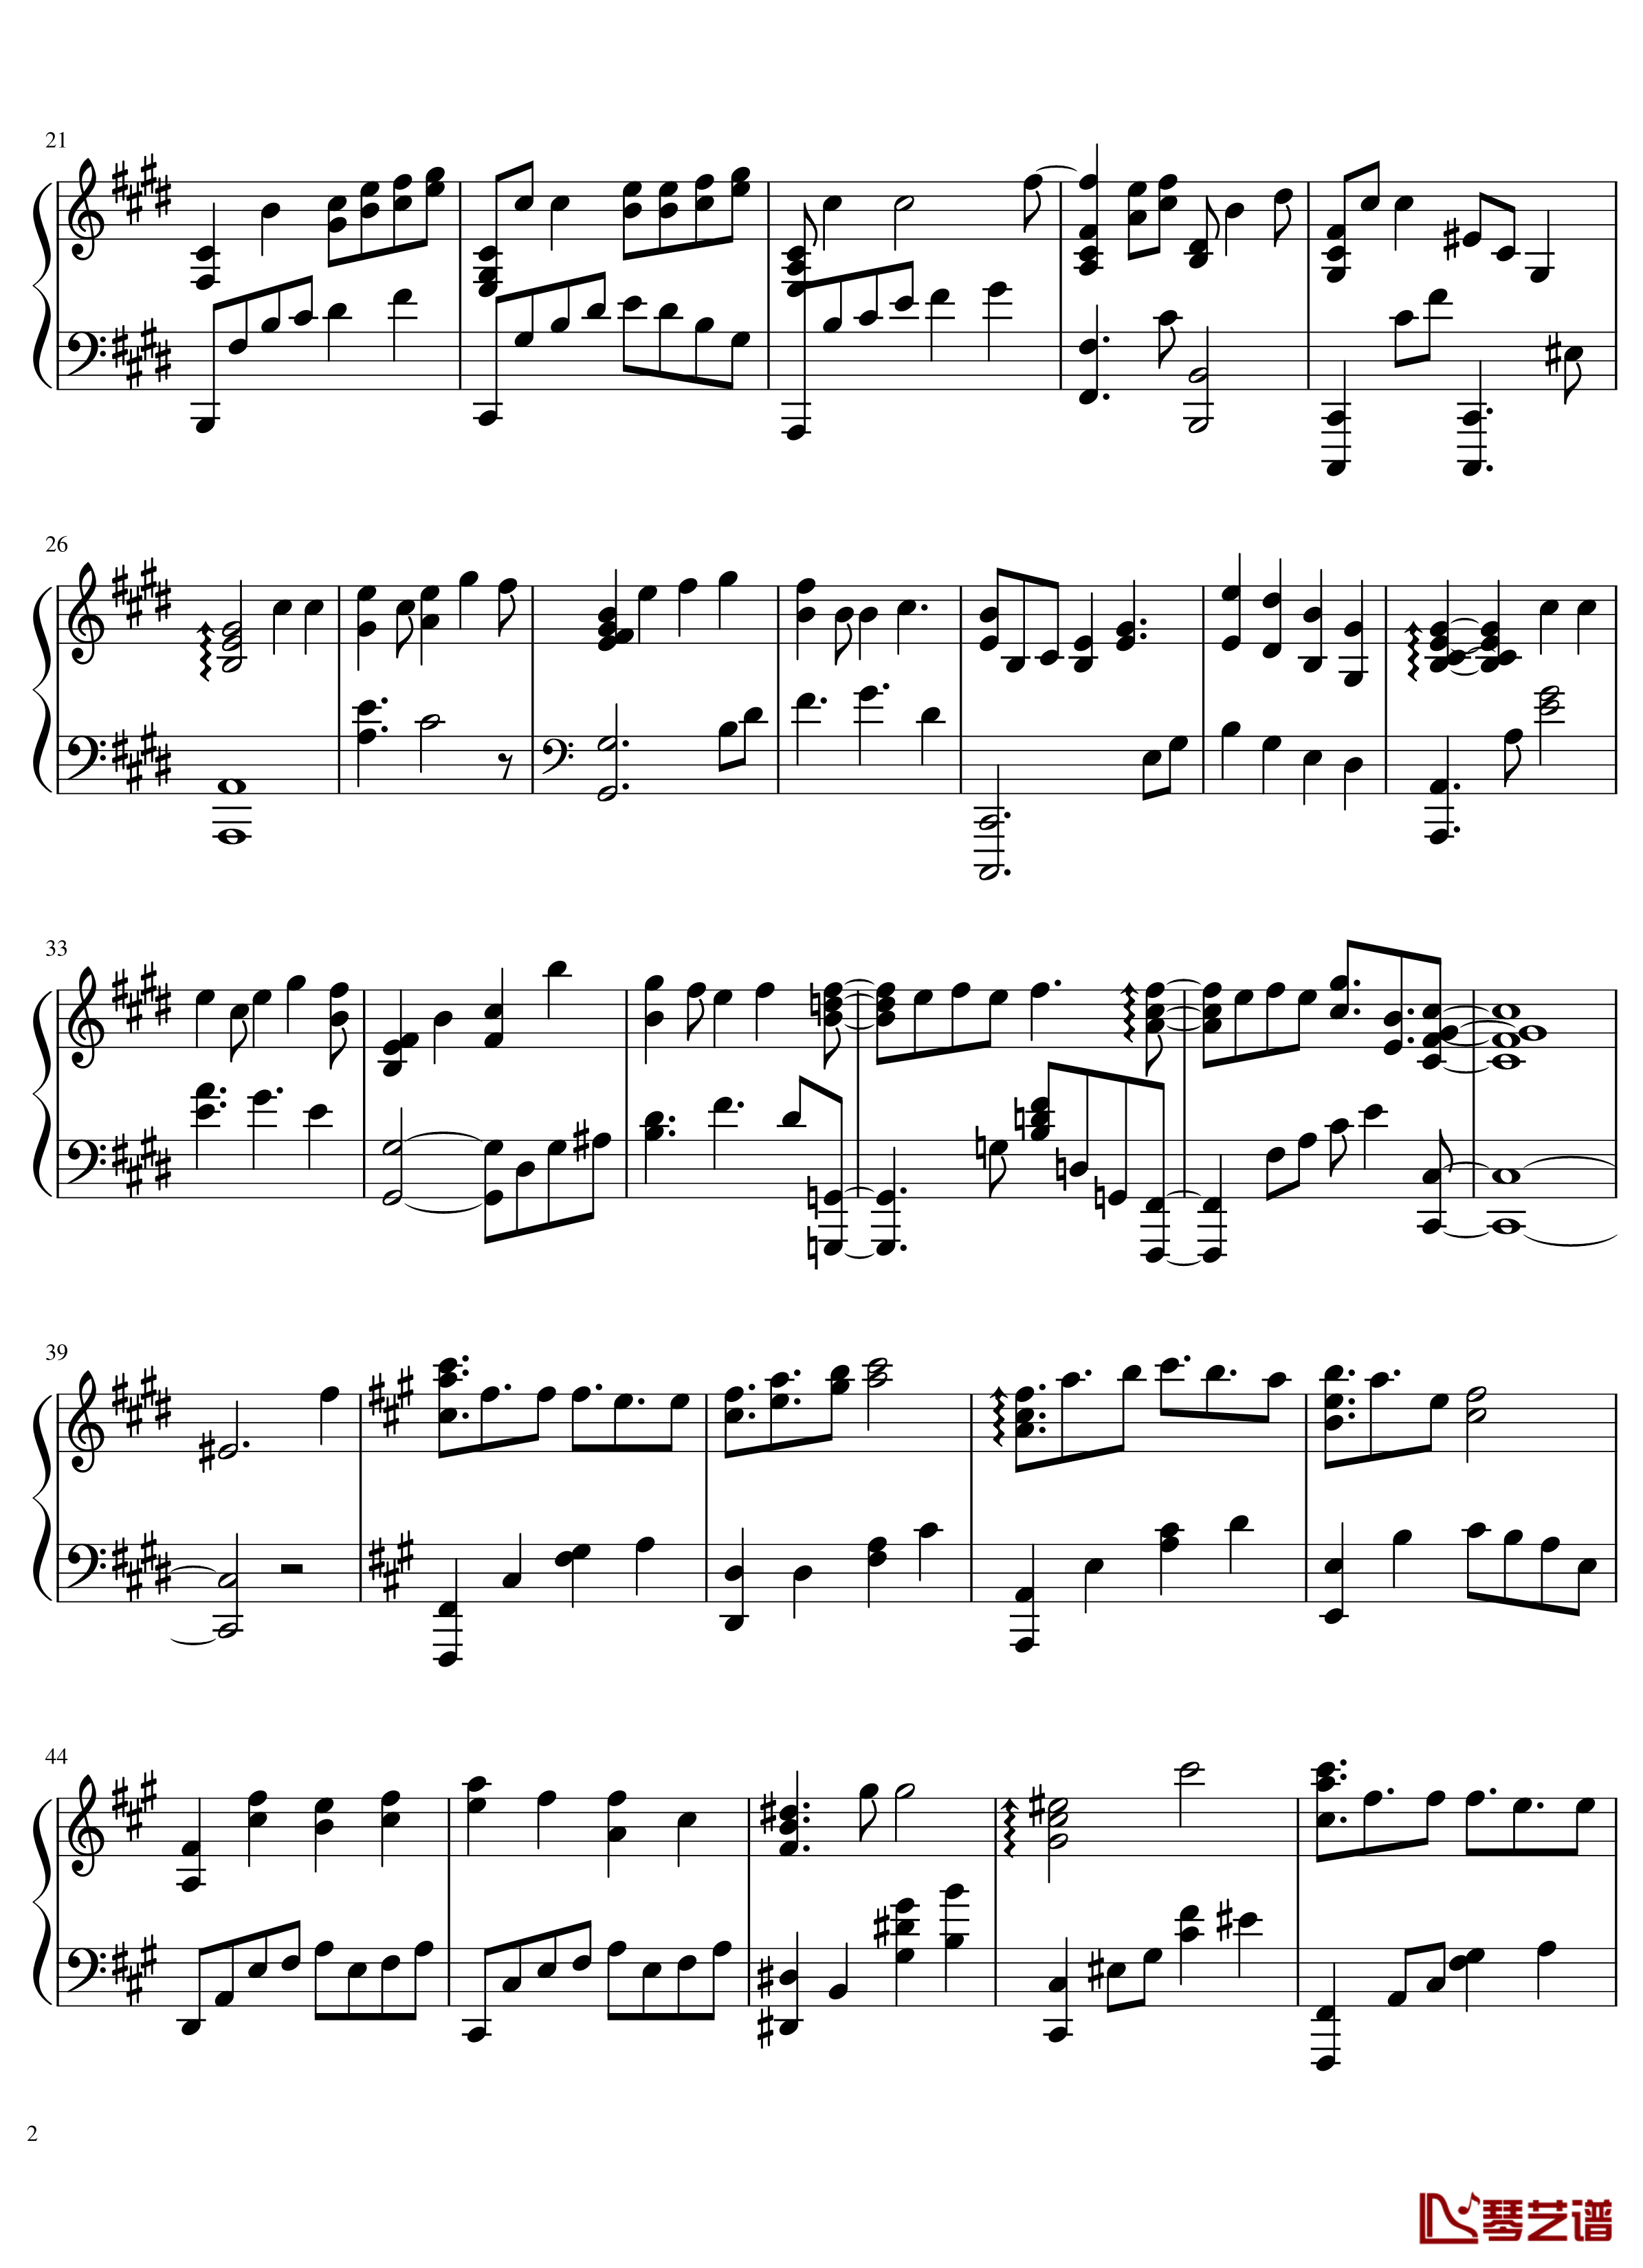 There is a reason钢琴谱-nogamenolife